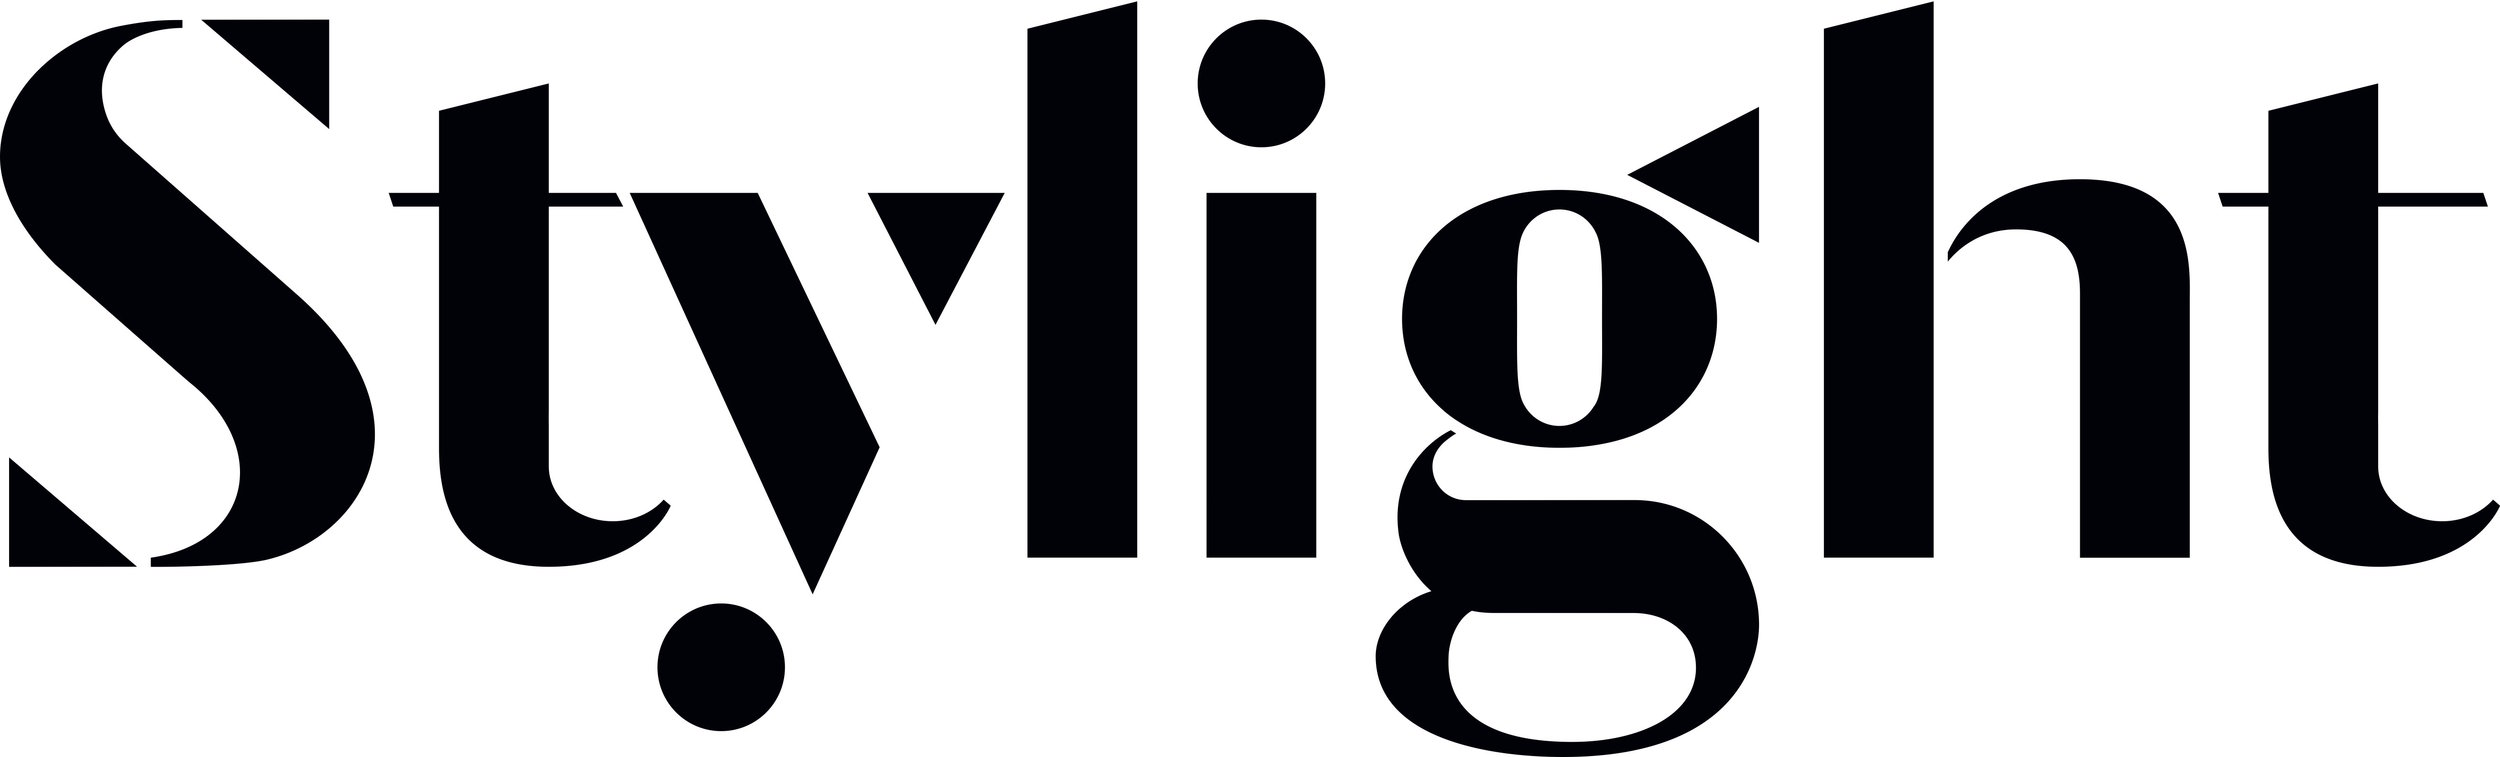 Stylight Logo.jpg